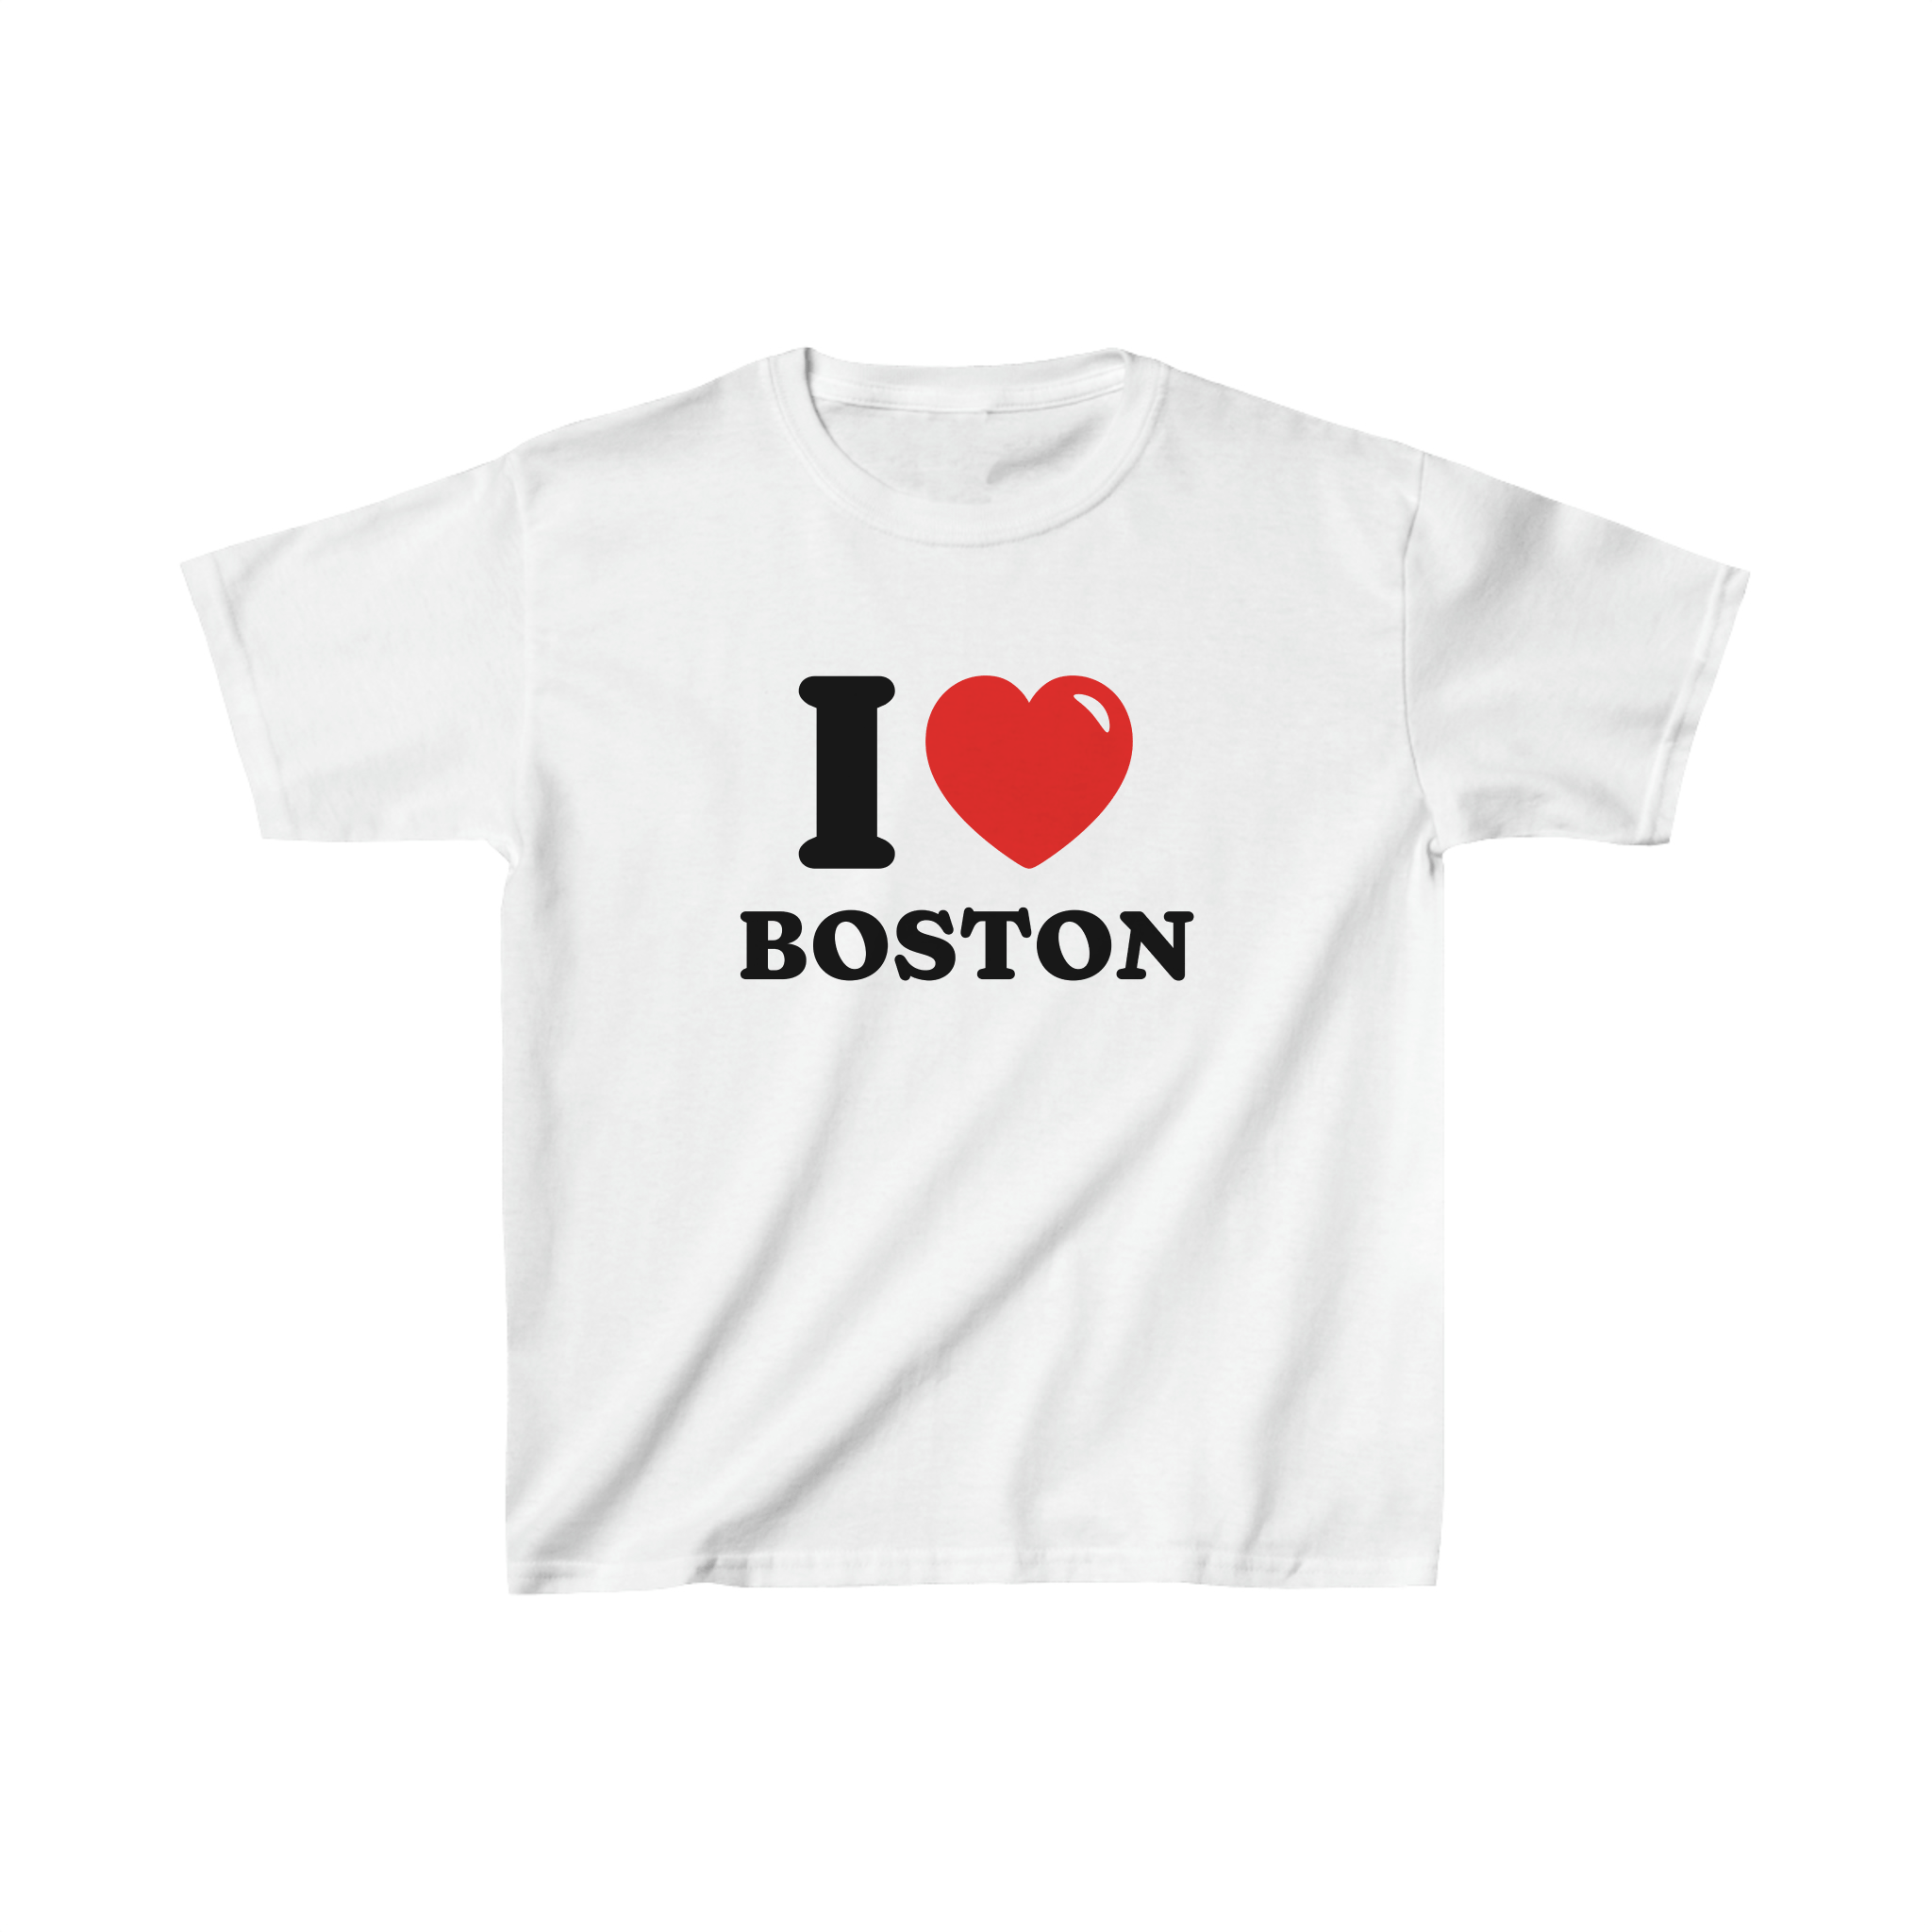 'I love Boston' baby tee - In Print We Trust